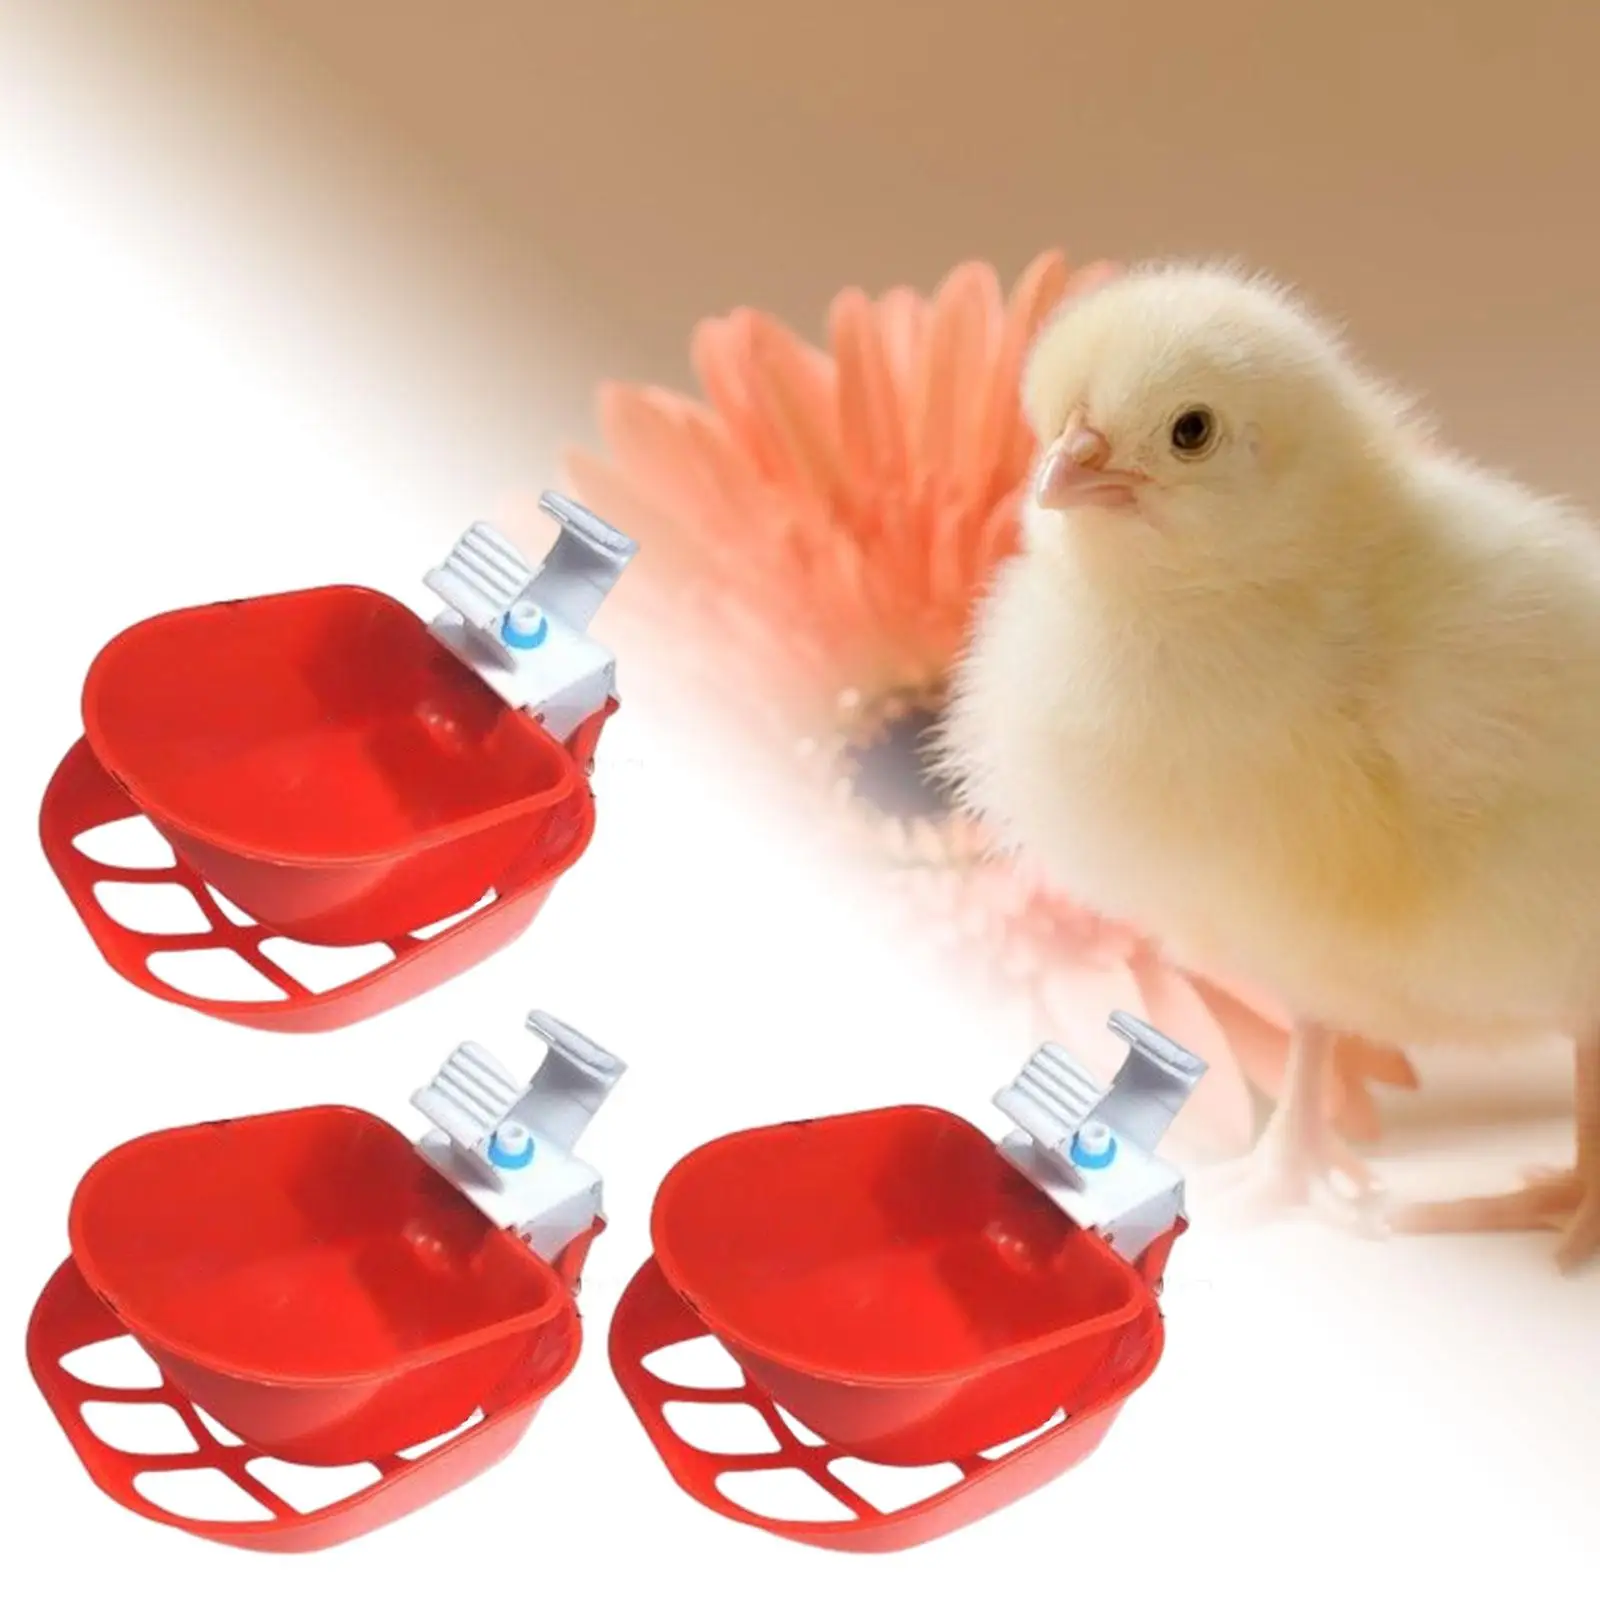 3 Pieces Chicken Waterer Cage Hang Portable Water Bowl for Hen Goose Birds Farm Turkeys